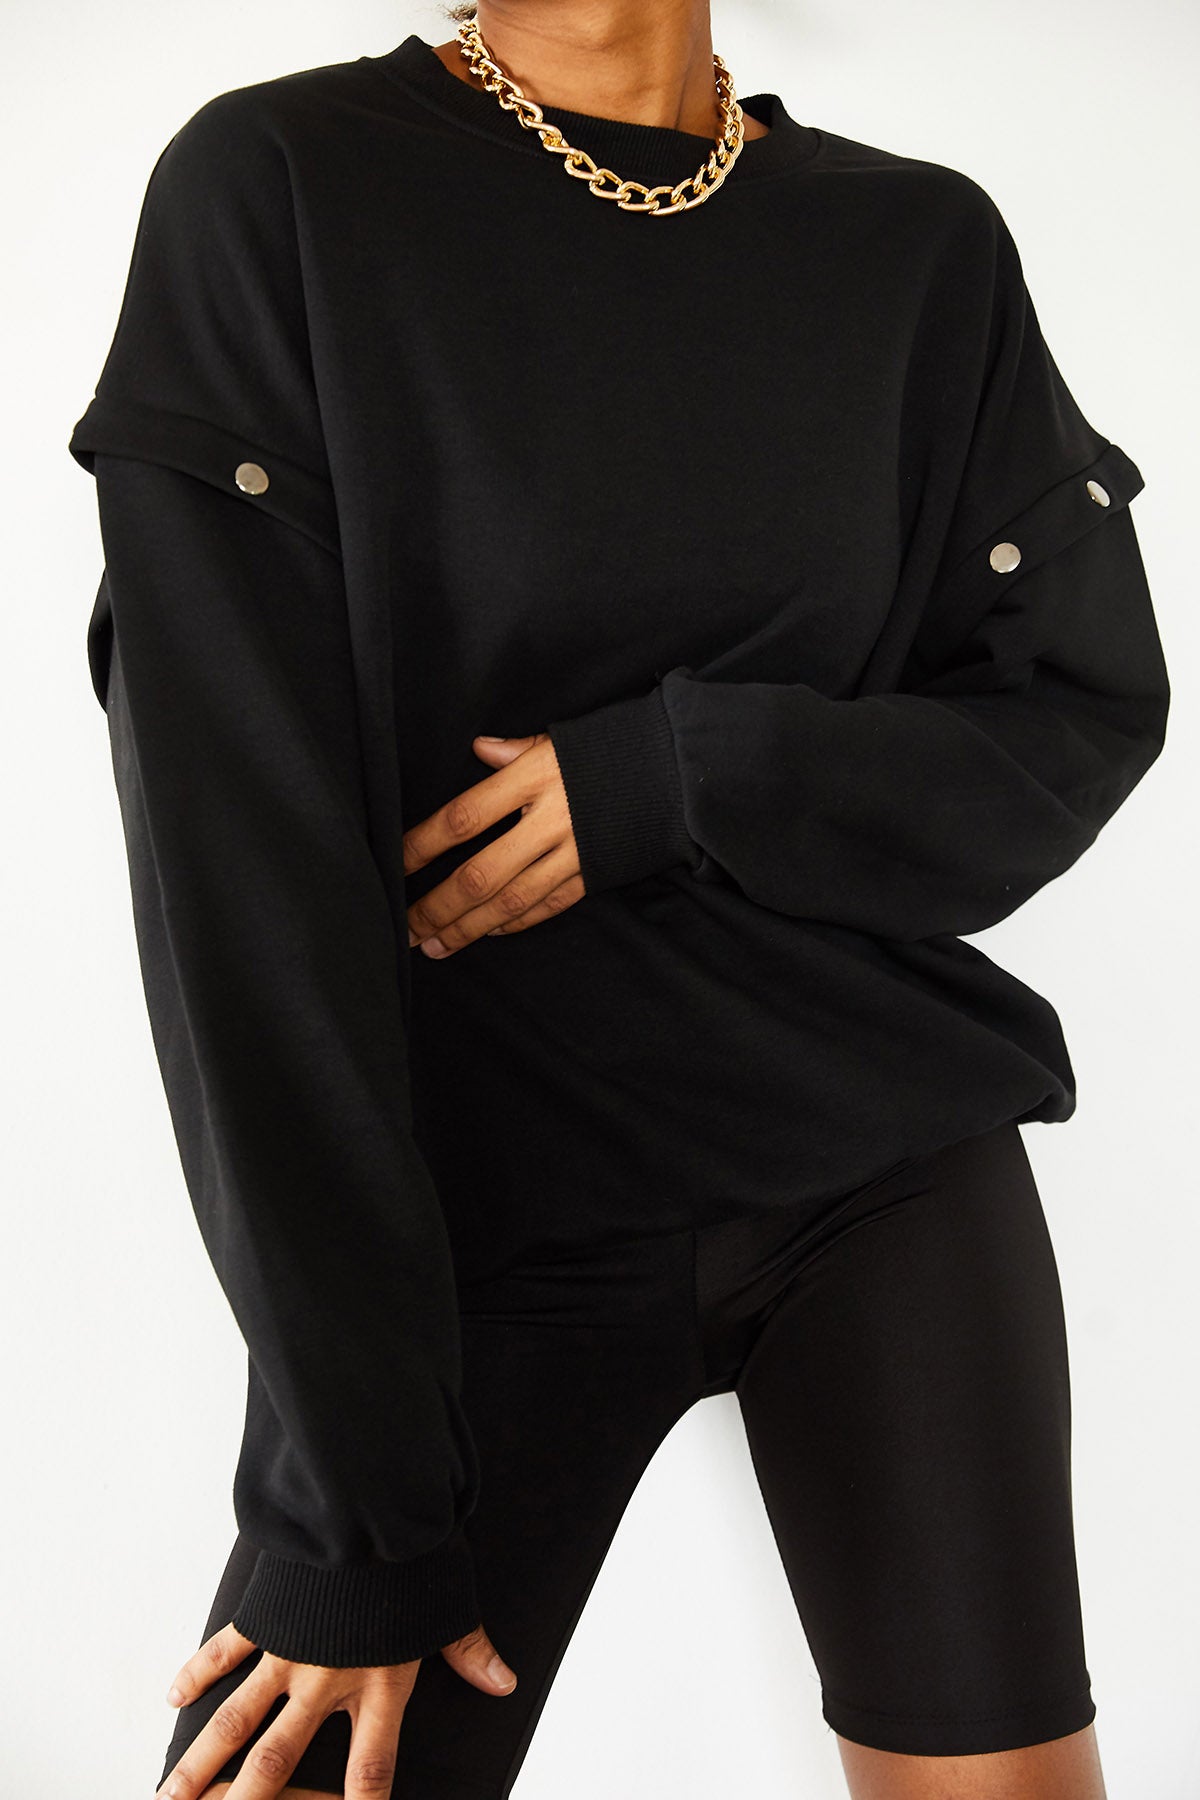 Image of Women's Sleeve Detail Black Sweatshirt